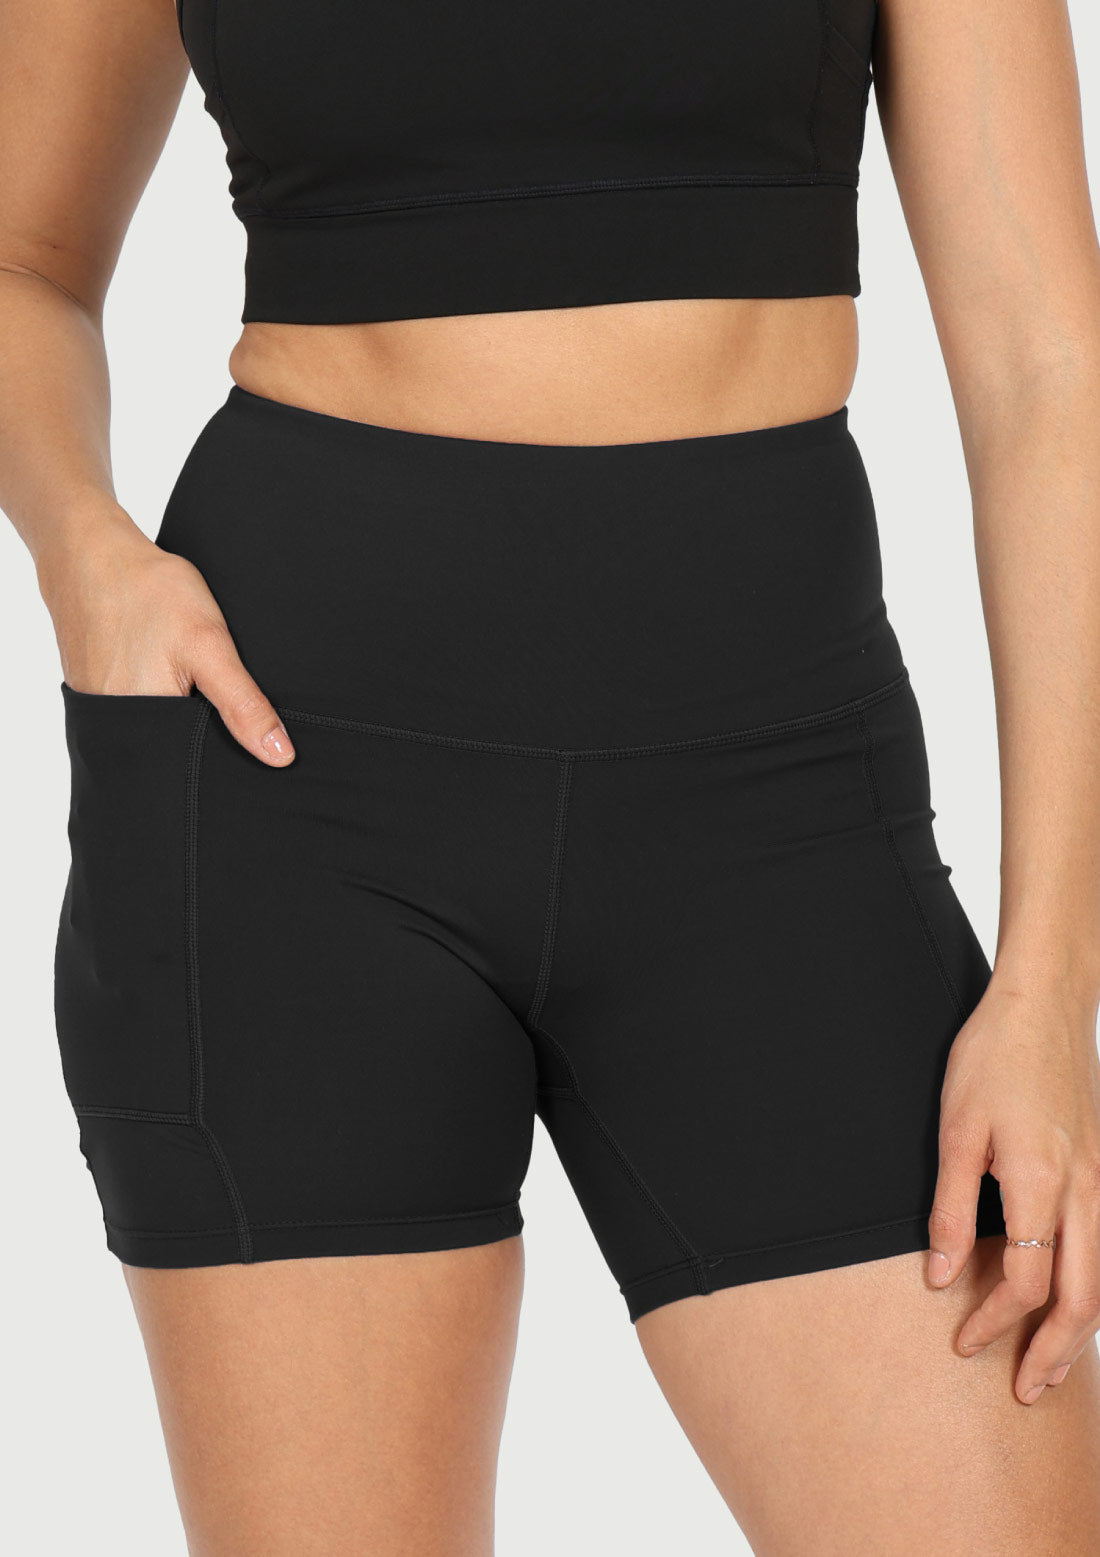 Buy Yoga Shorts for Women Online from Blissclub